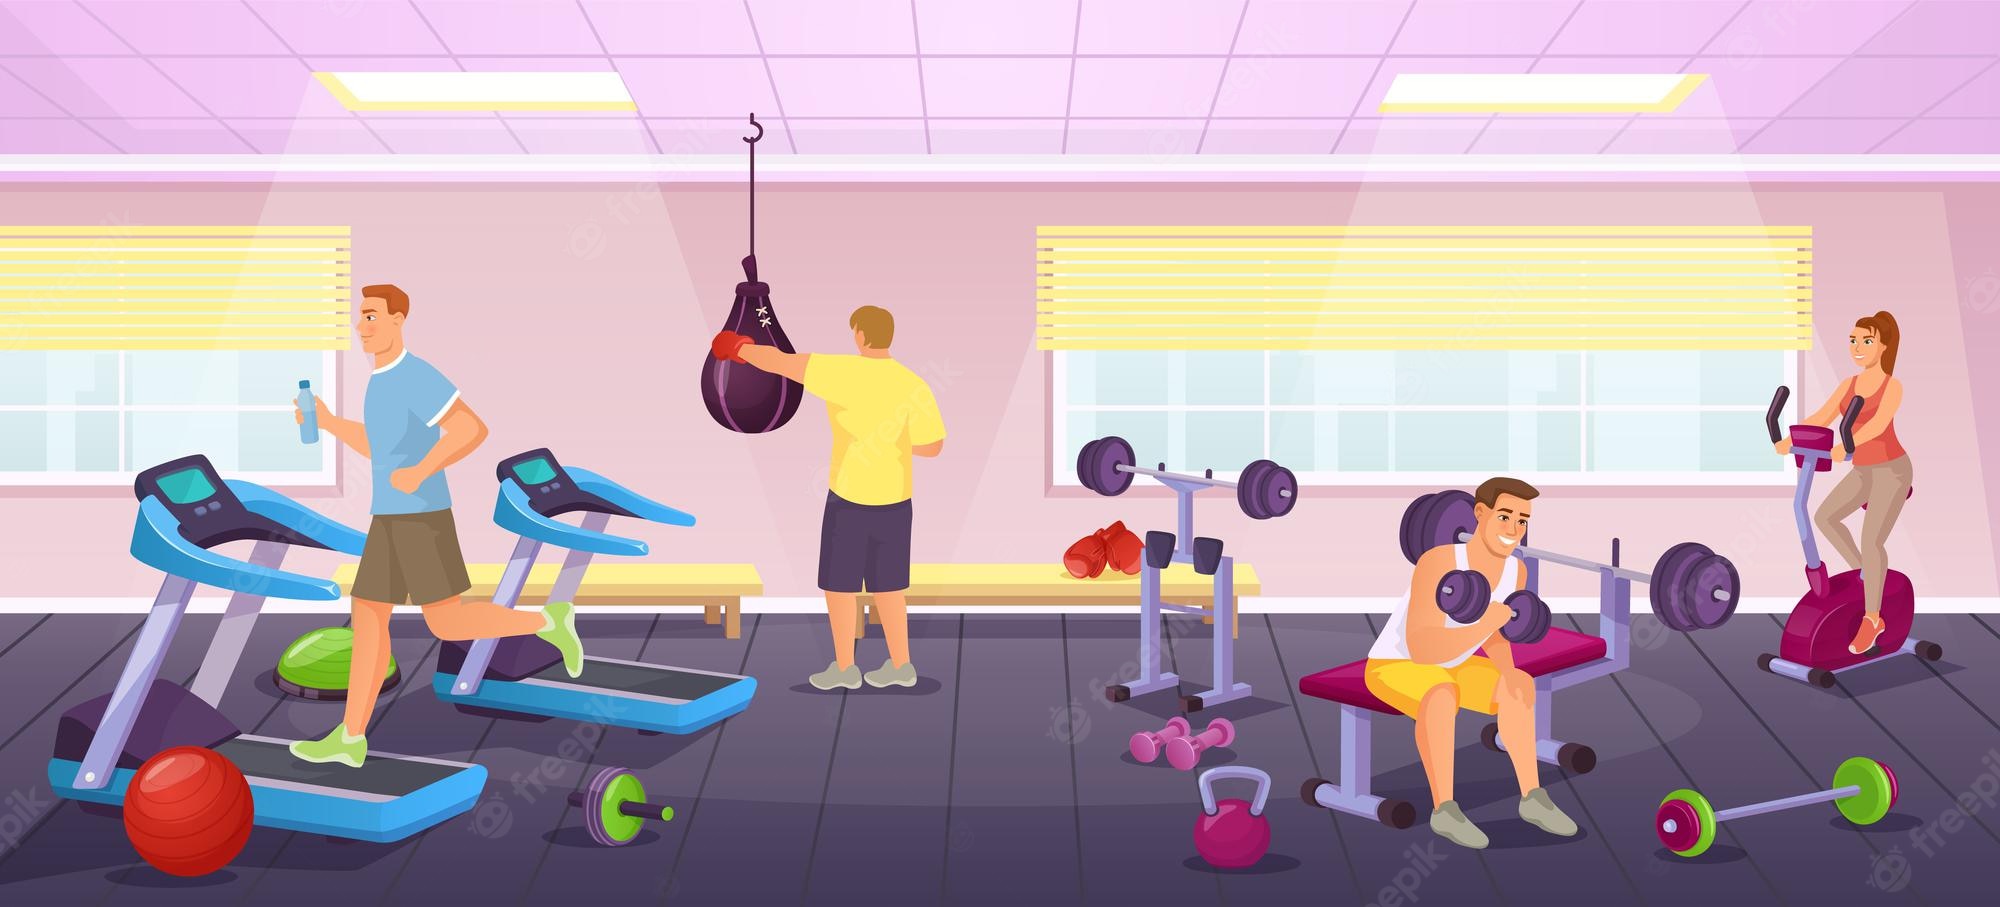 Download Free 100 + gym cartoon images